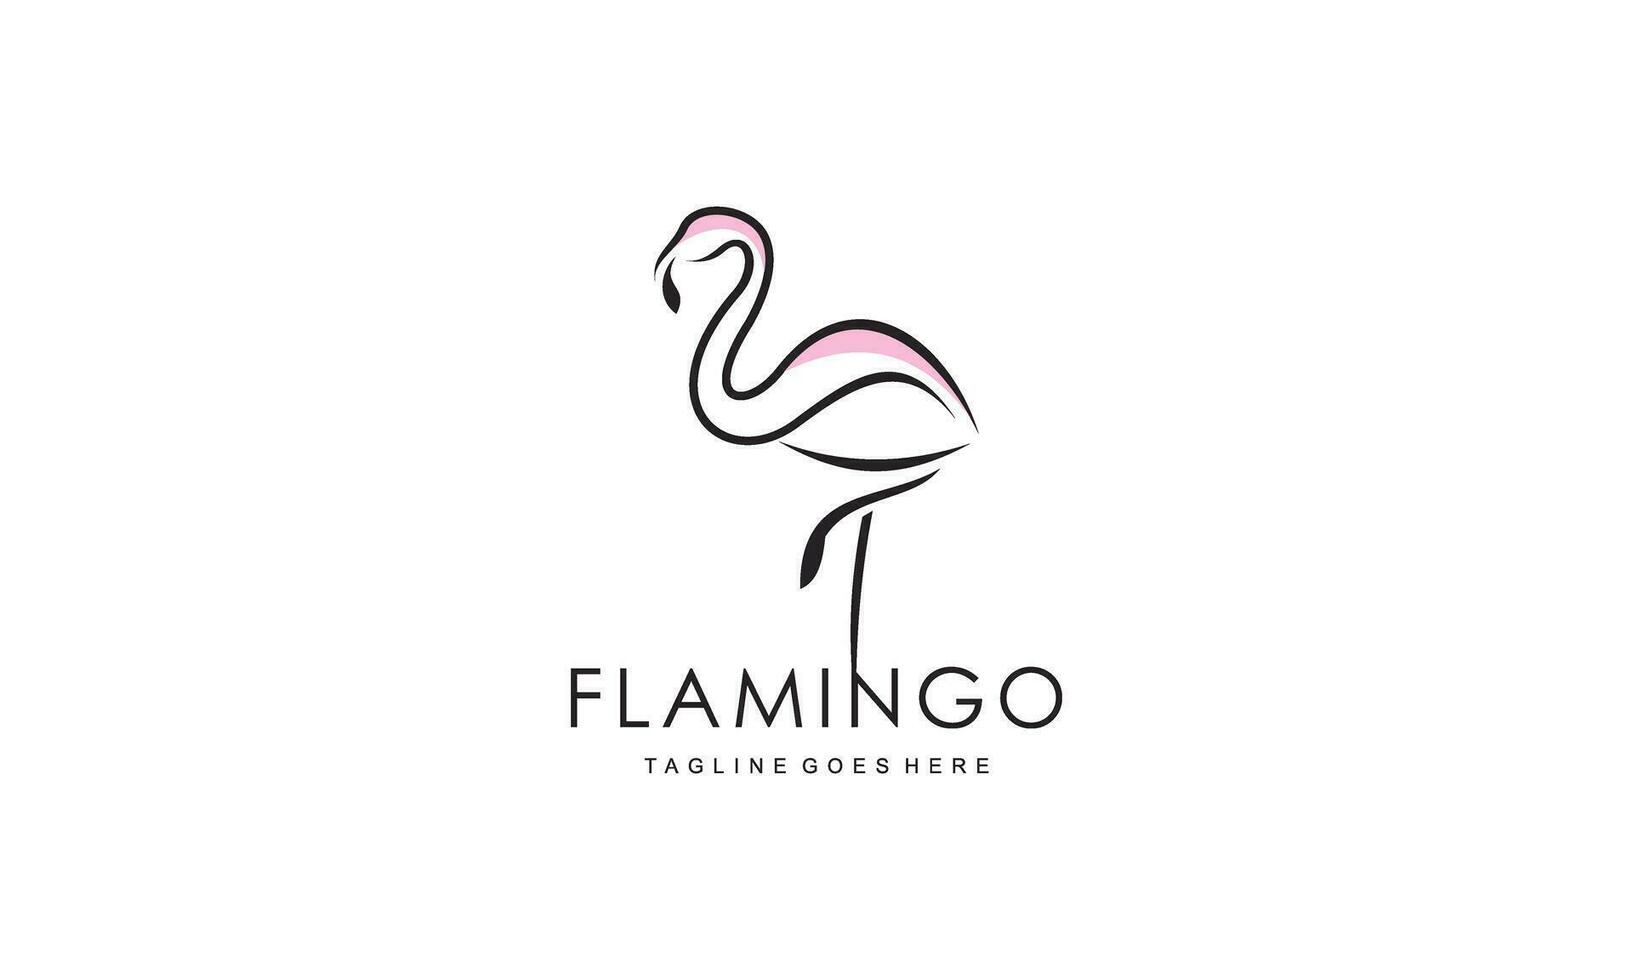 Flamingo logo concept design. Line art vector illustration